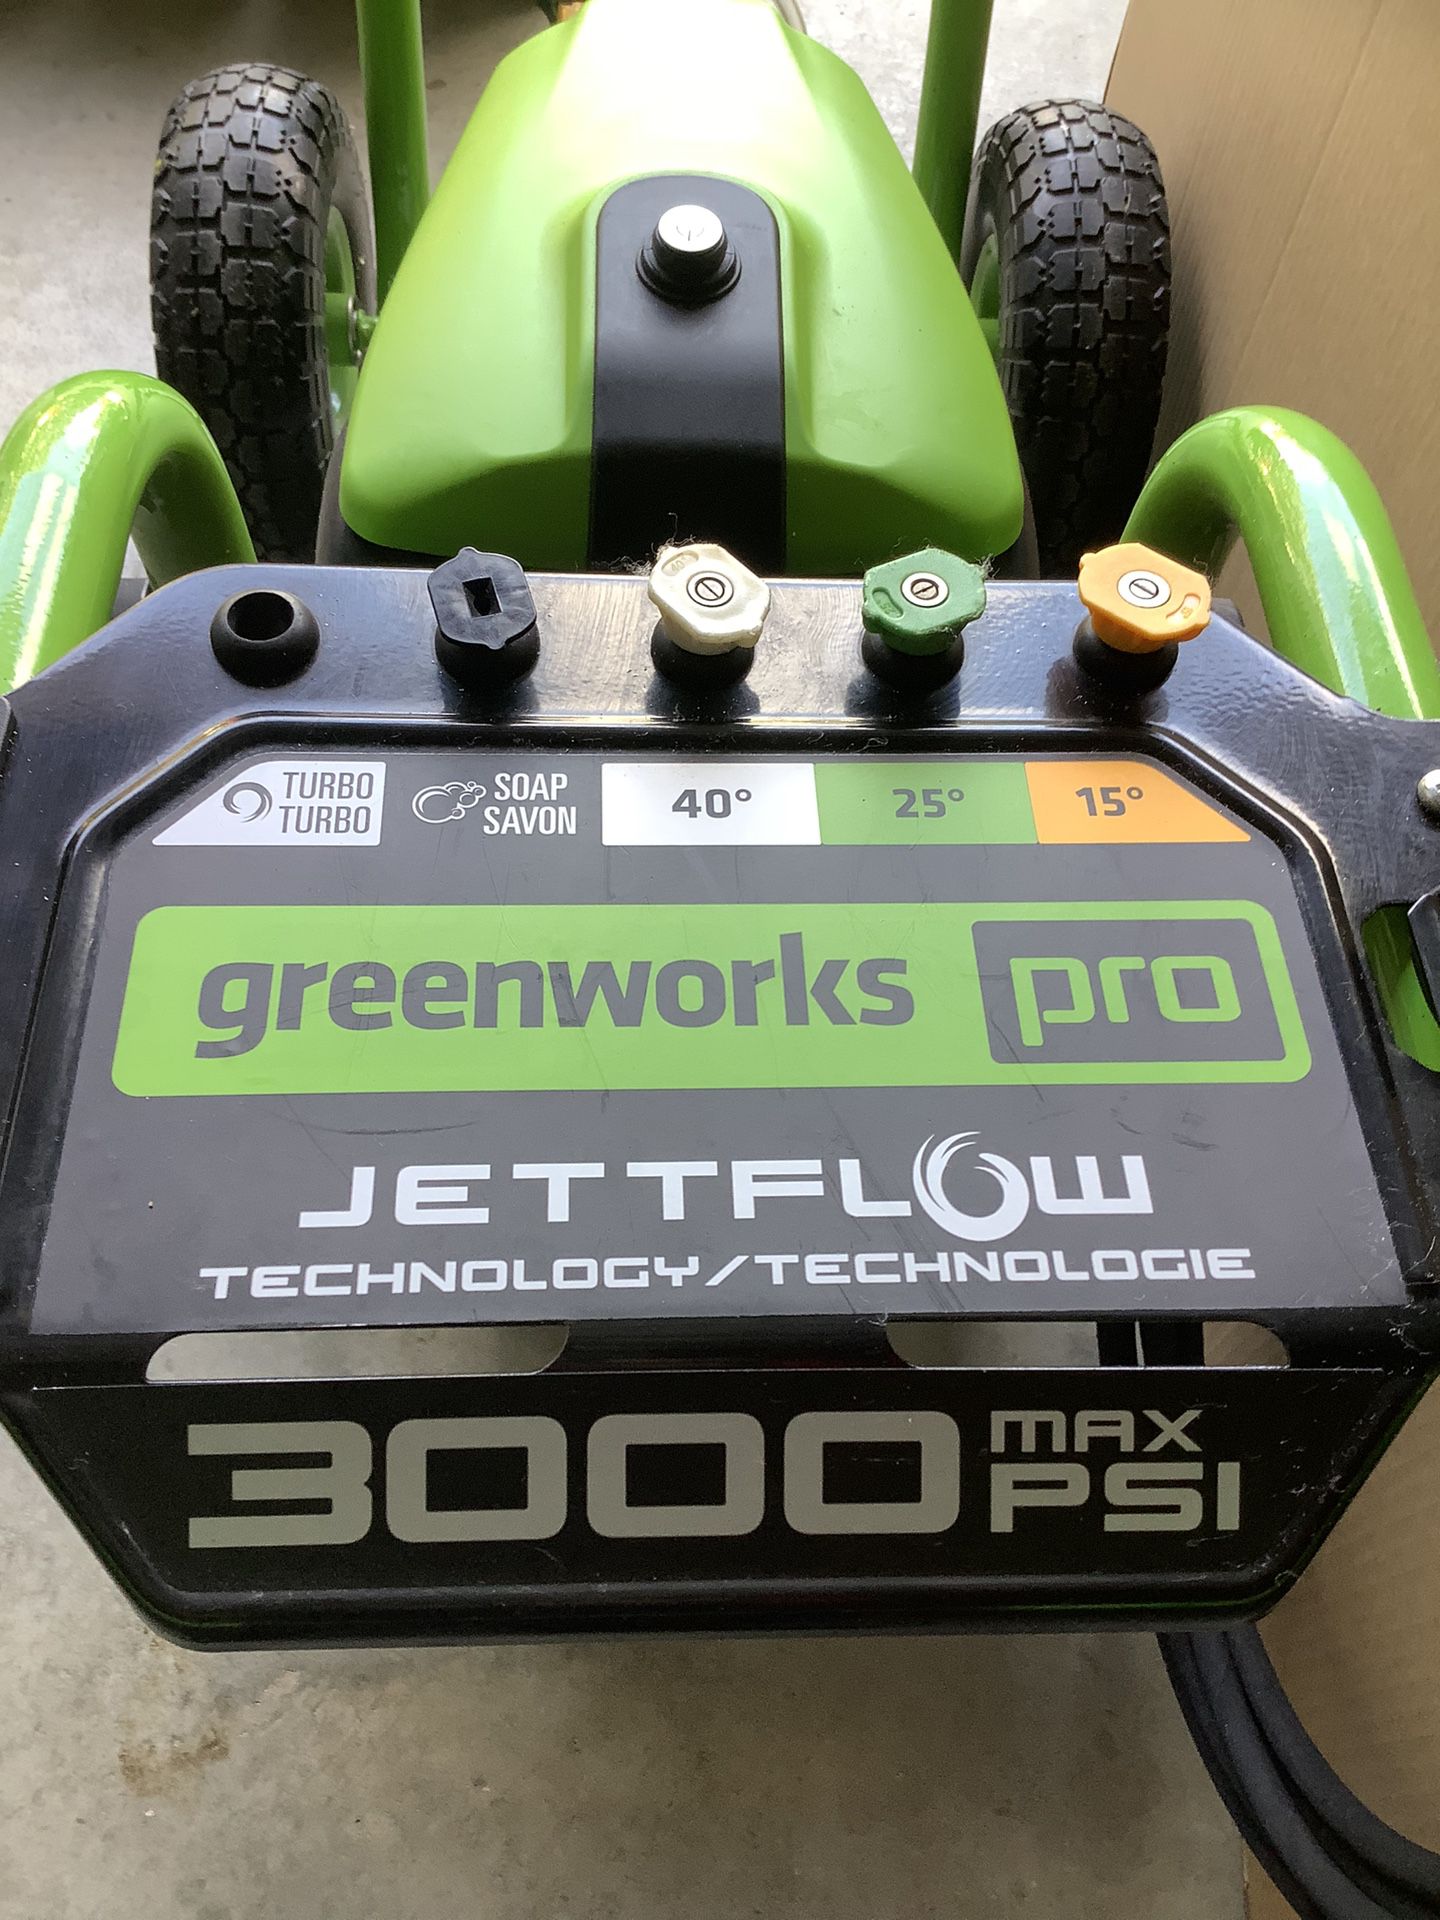 Greenworks pro - Electric Pressure Washer